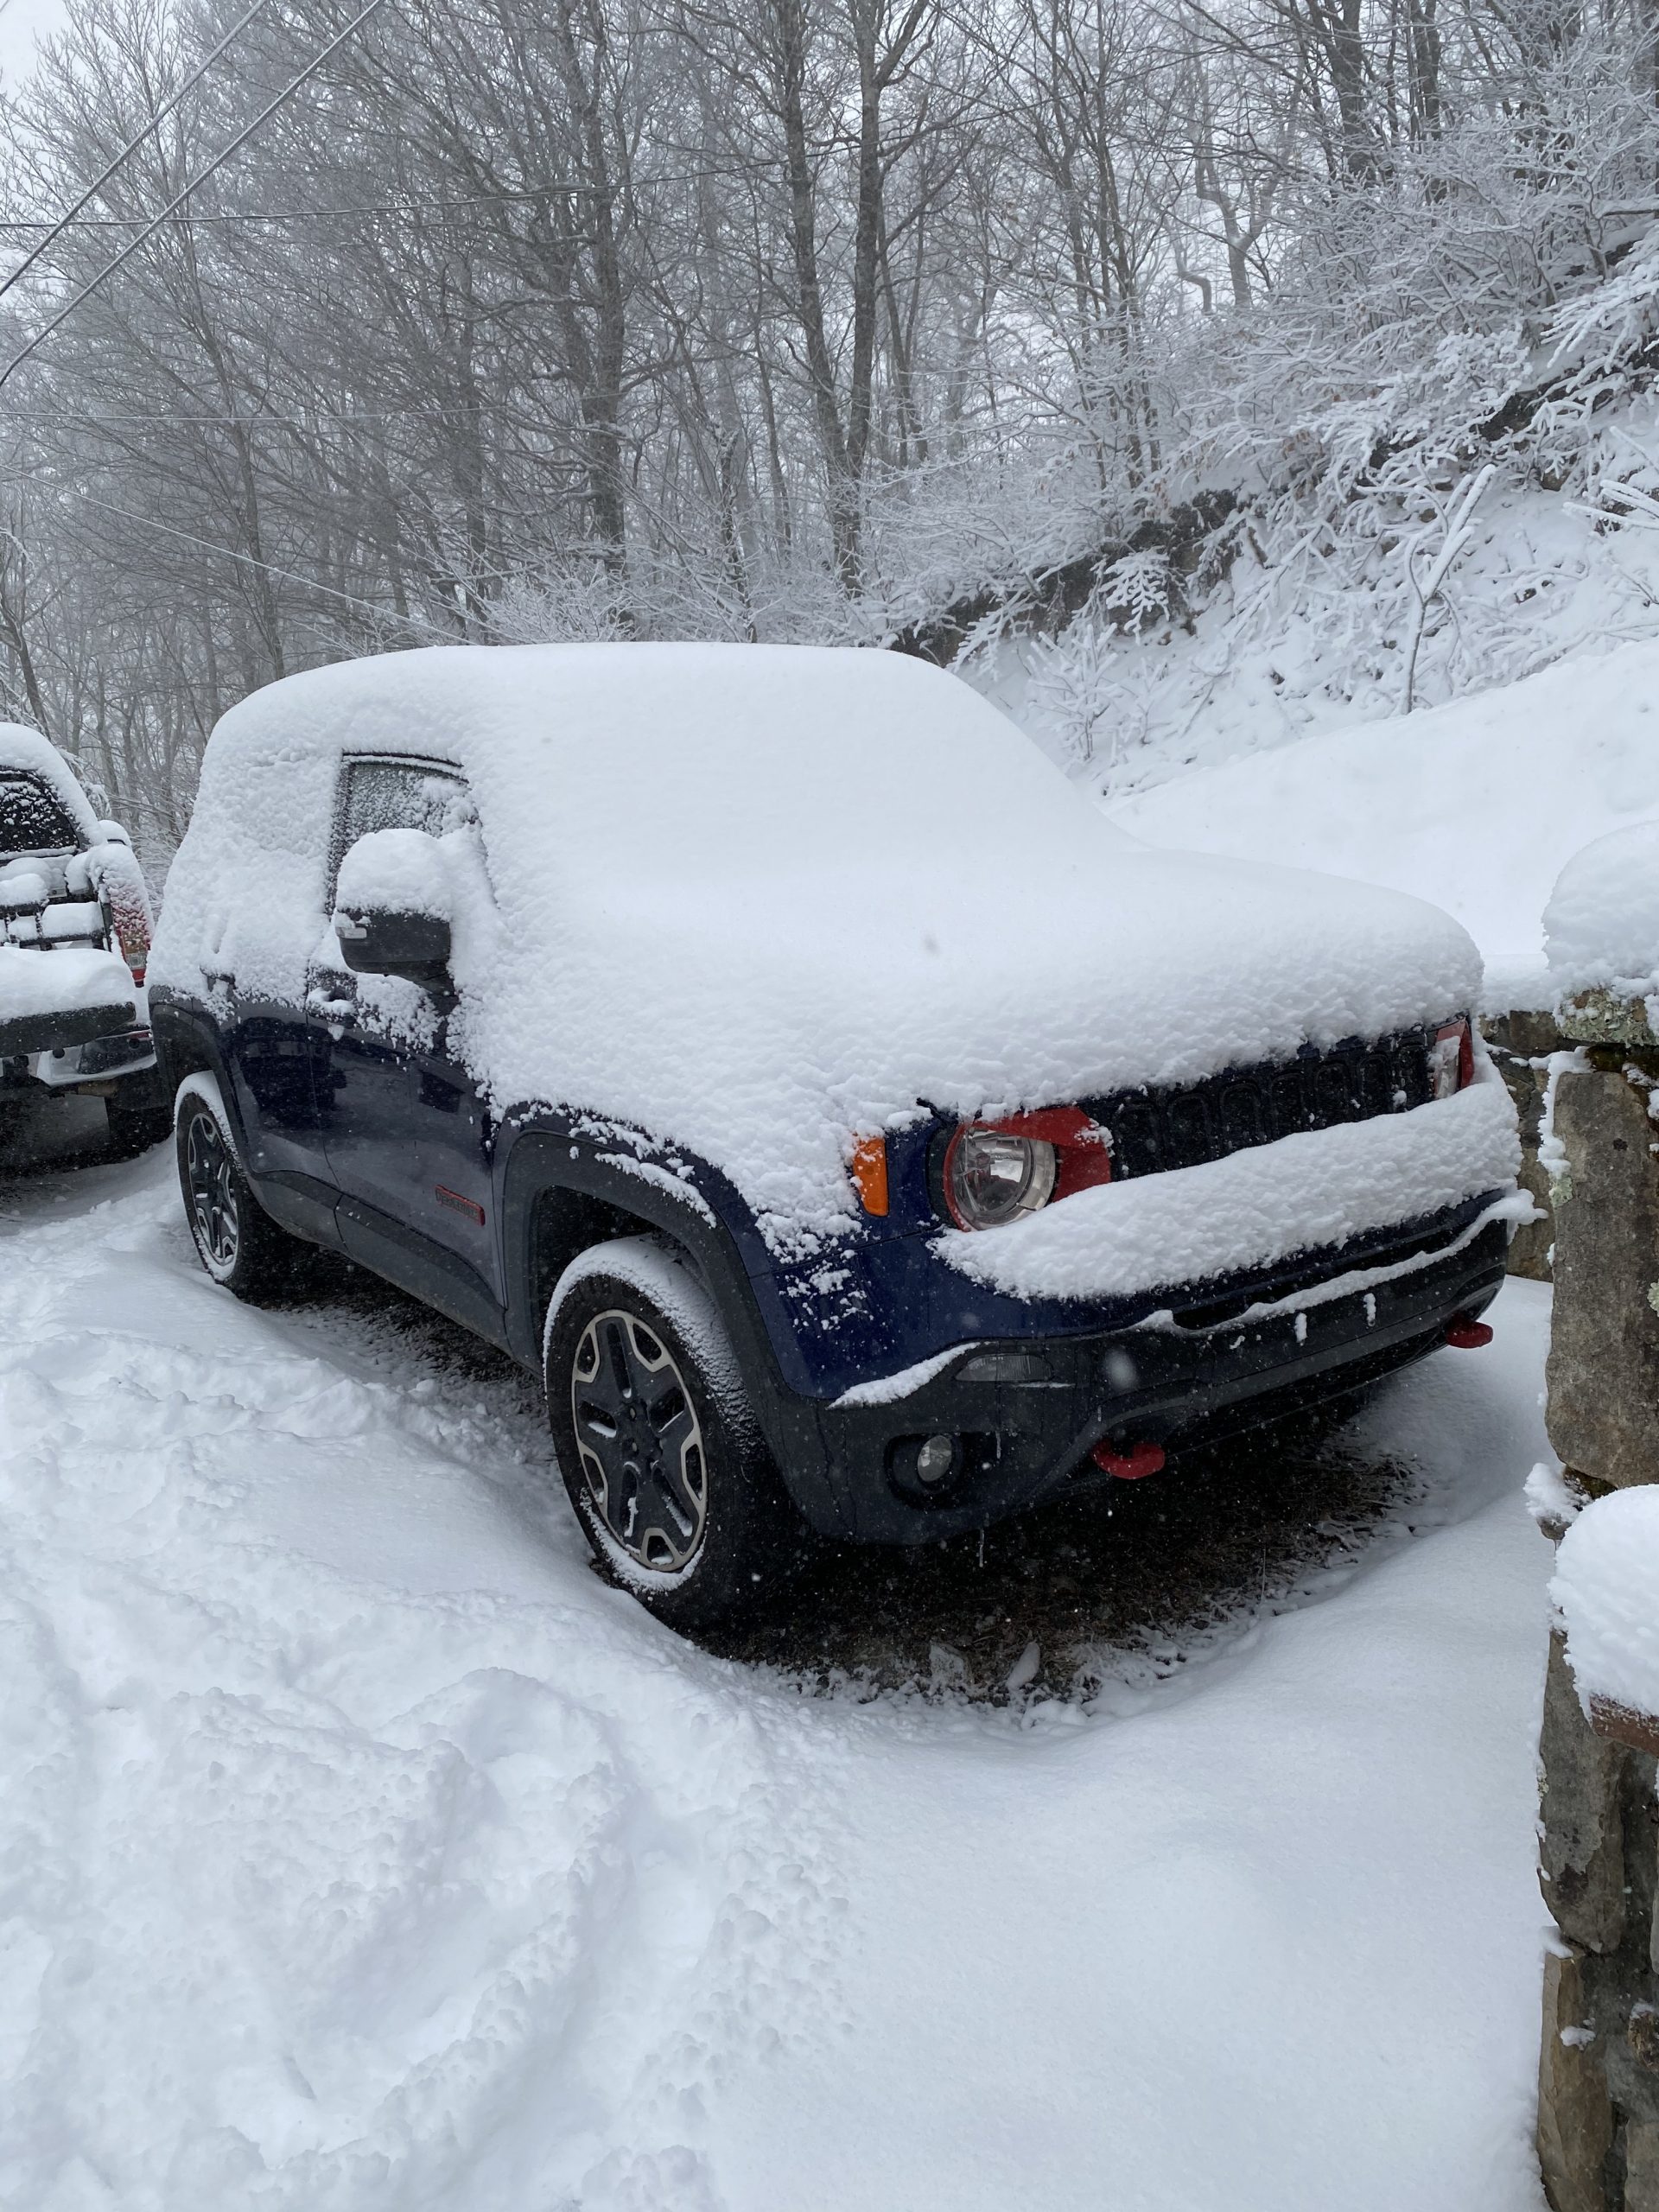 2016 Jeep Renegade Trailhawk in Snow